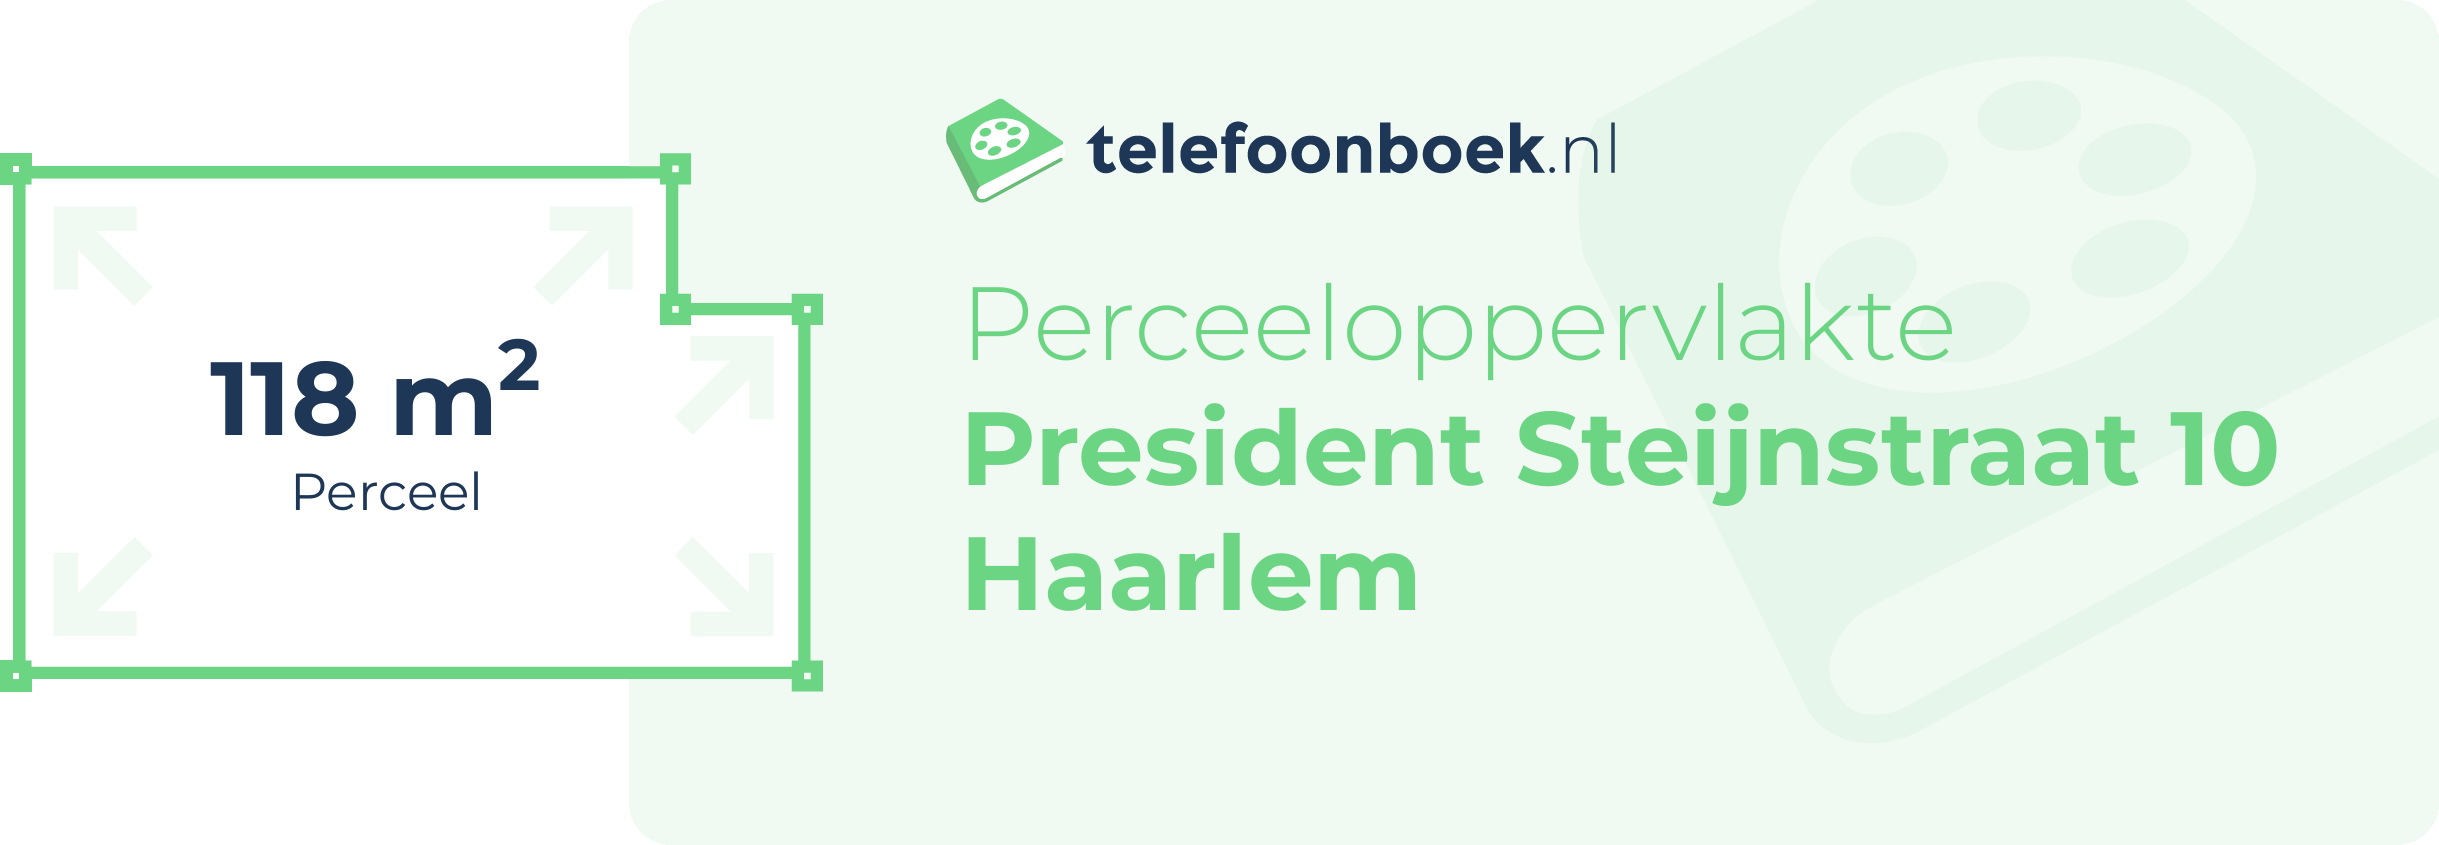 Perceeloppervlakte President Steijnstraat 10 Haarlem